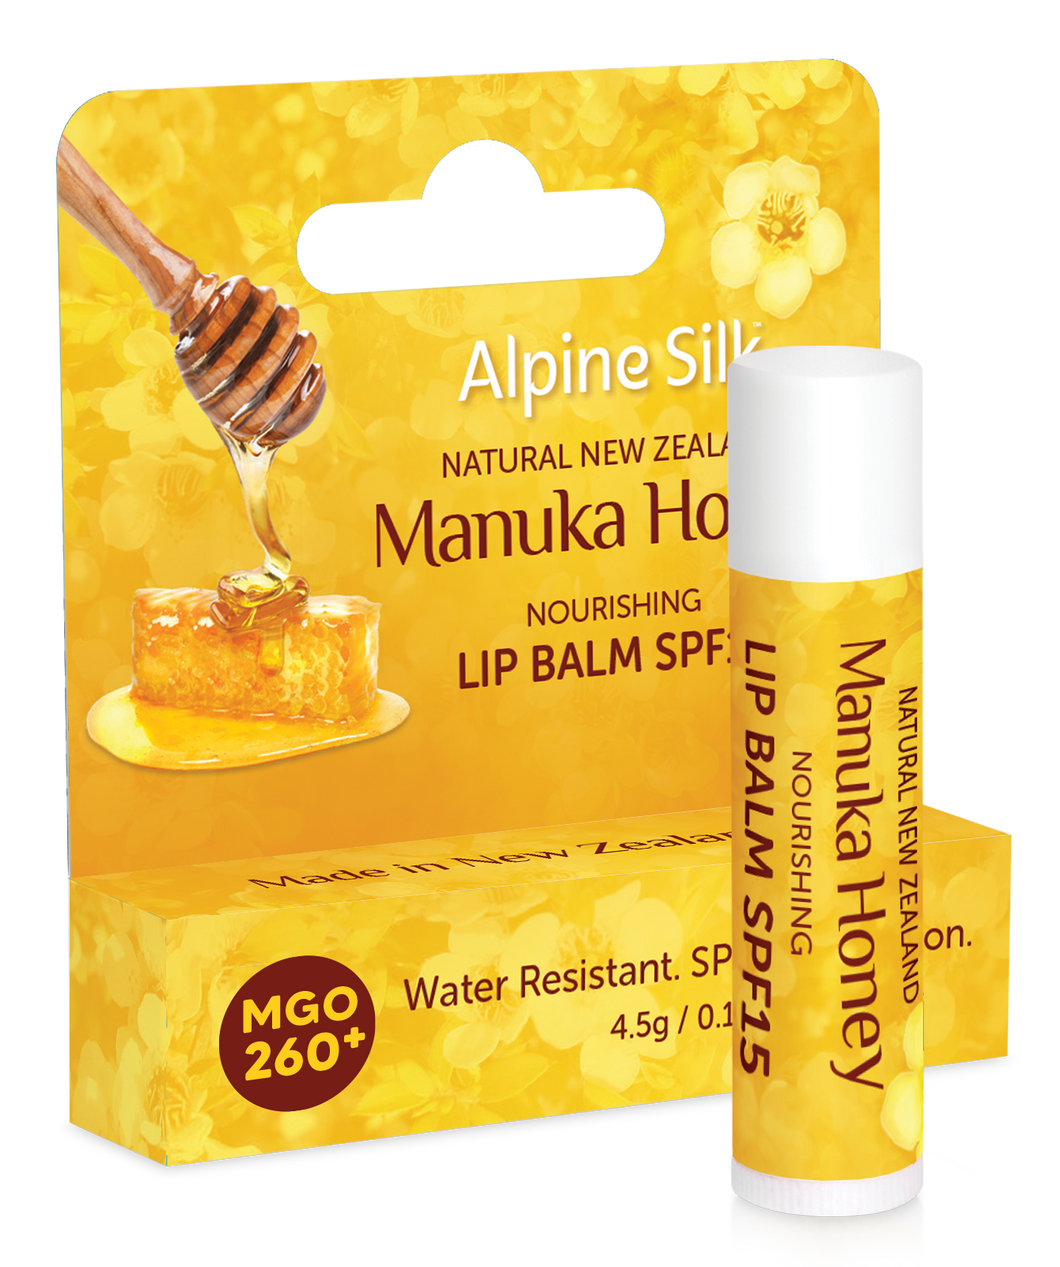 Alpine Silk Manuka Honey SPF15 Lip Balm 4.5g